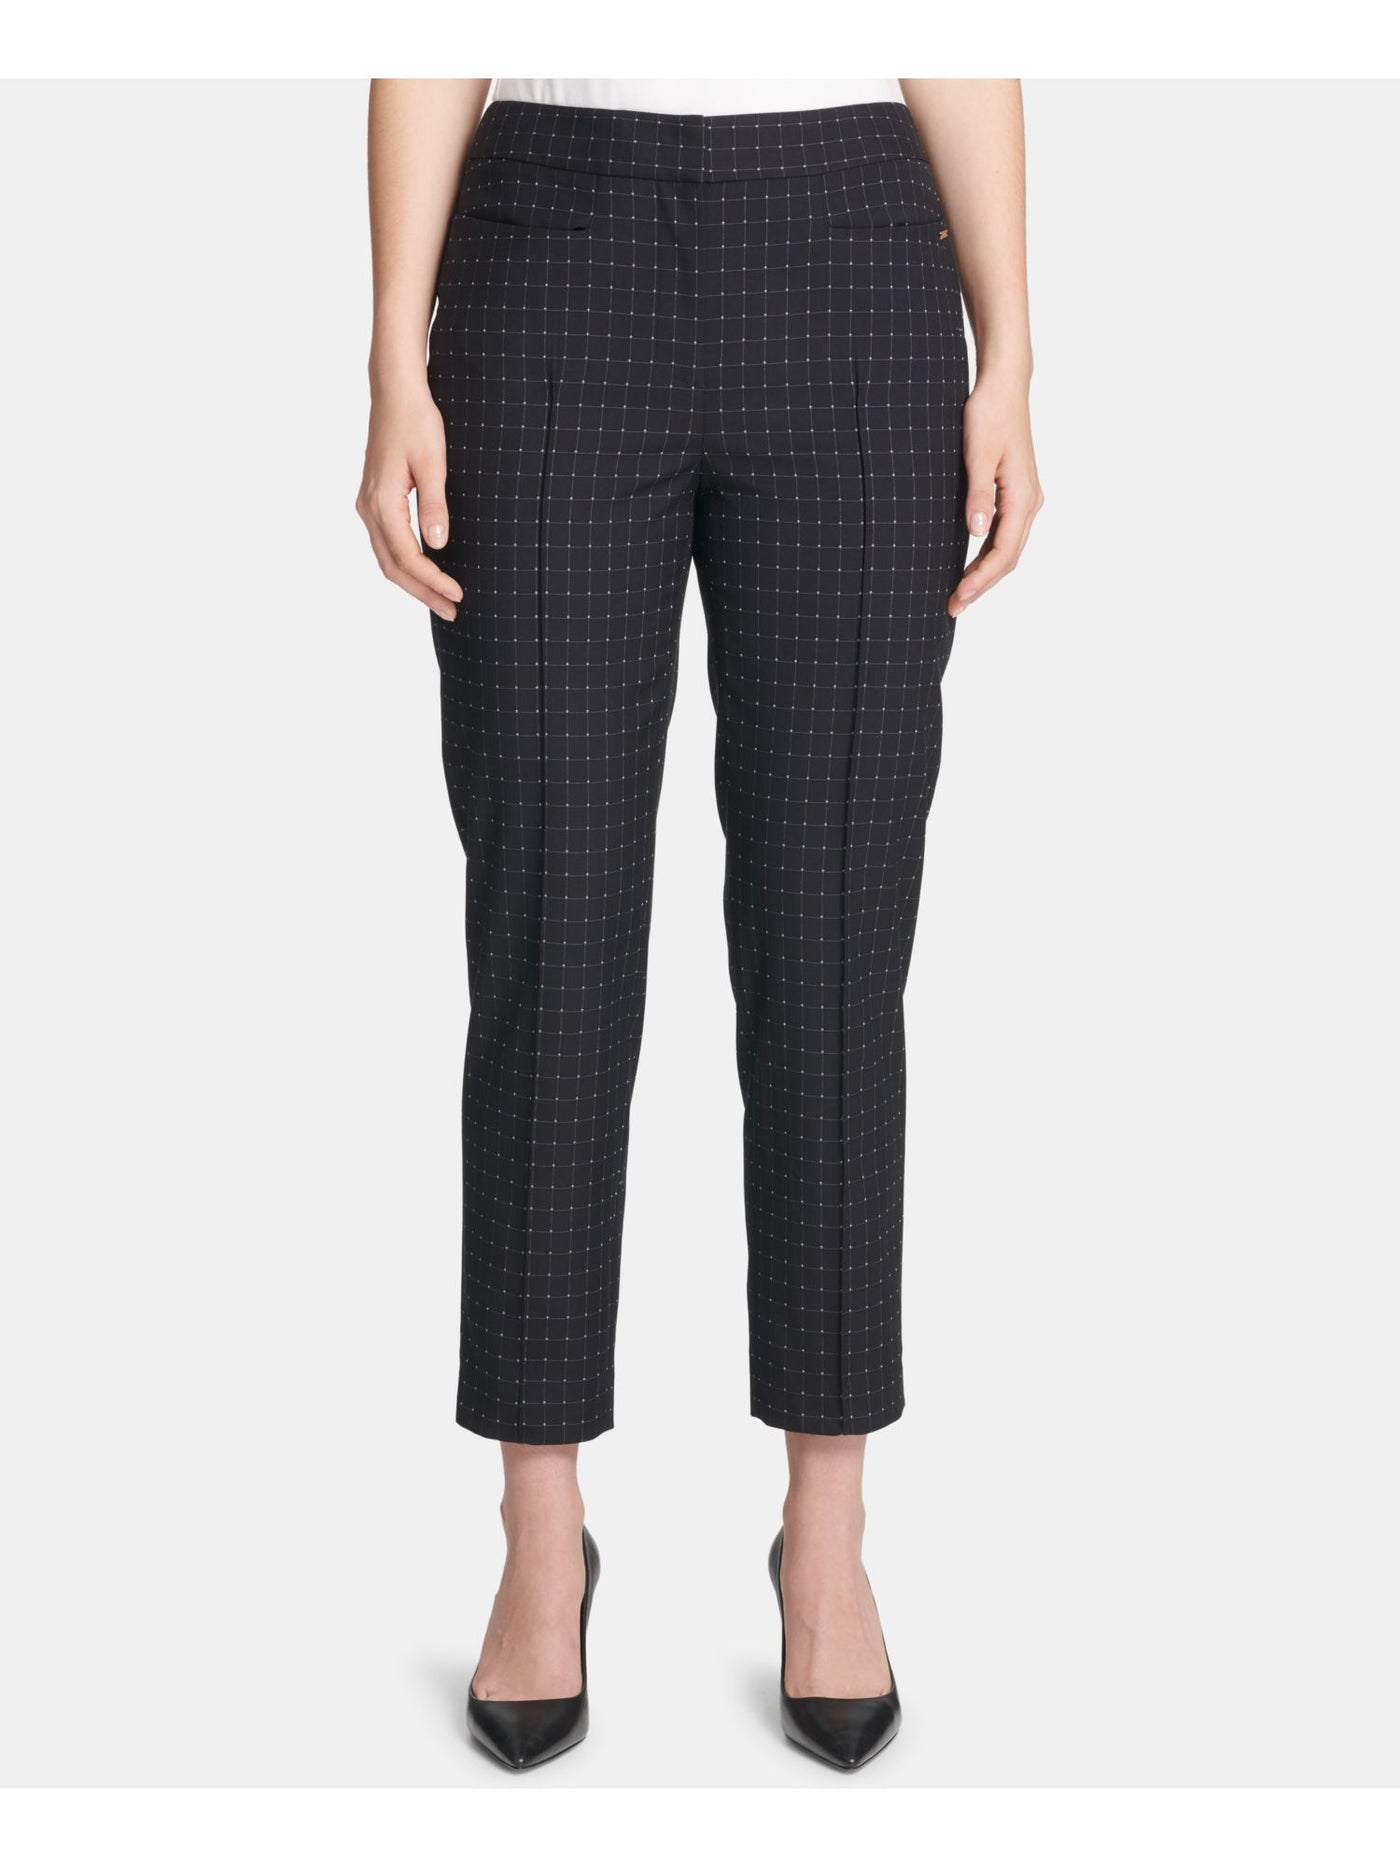 DKNY Womens Black Pinstripe Wear To Work Cropped Pants 2